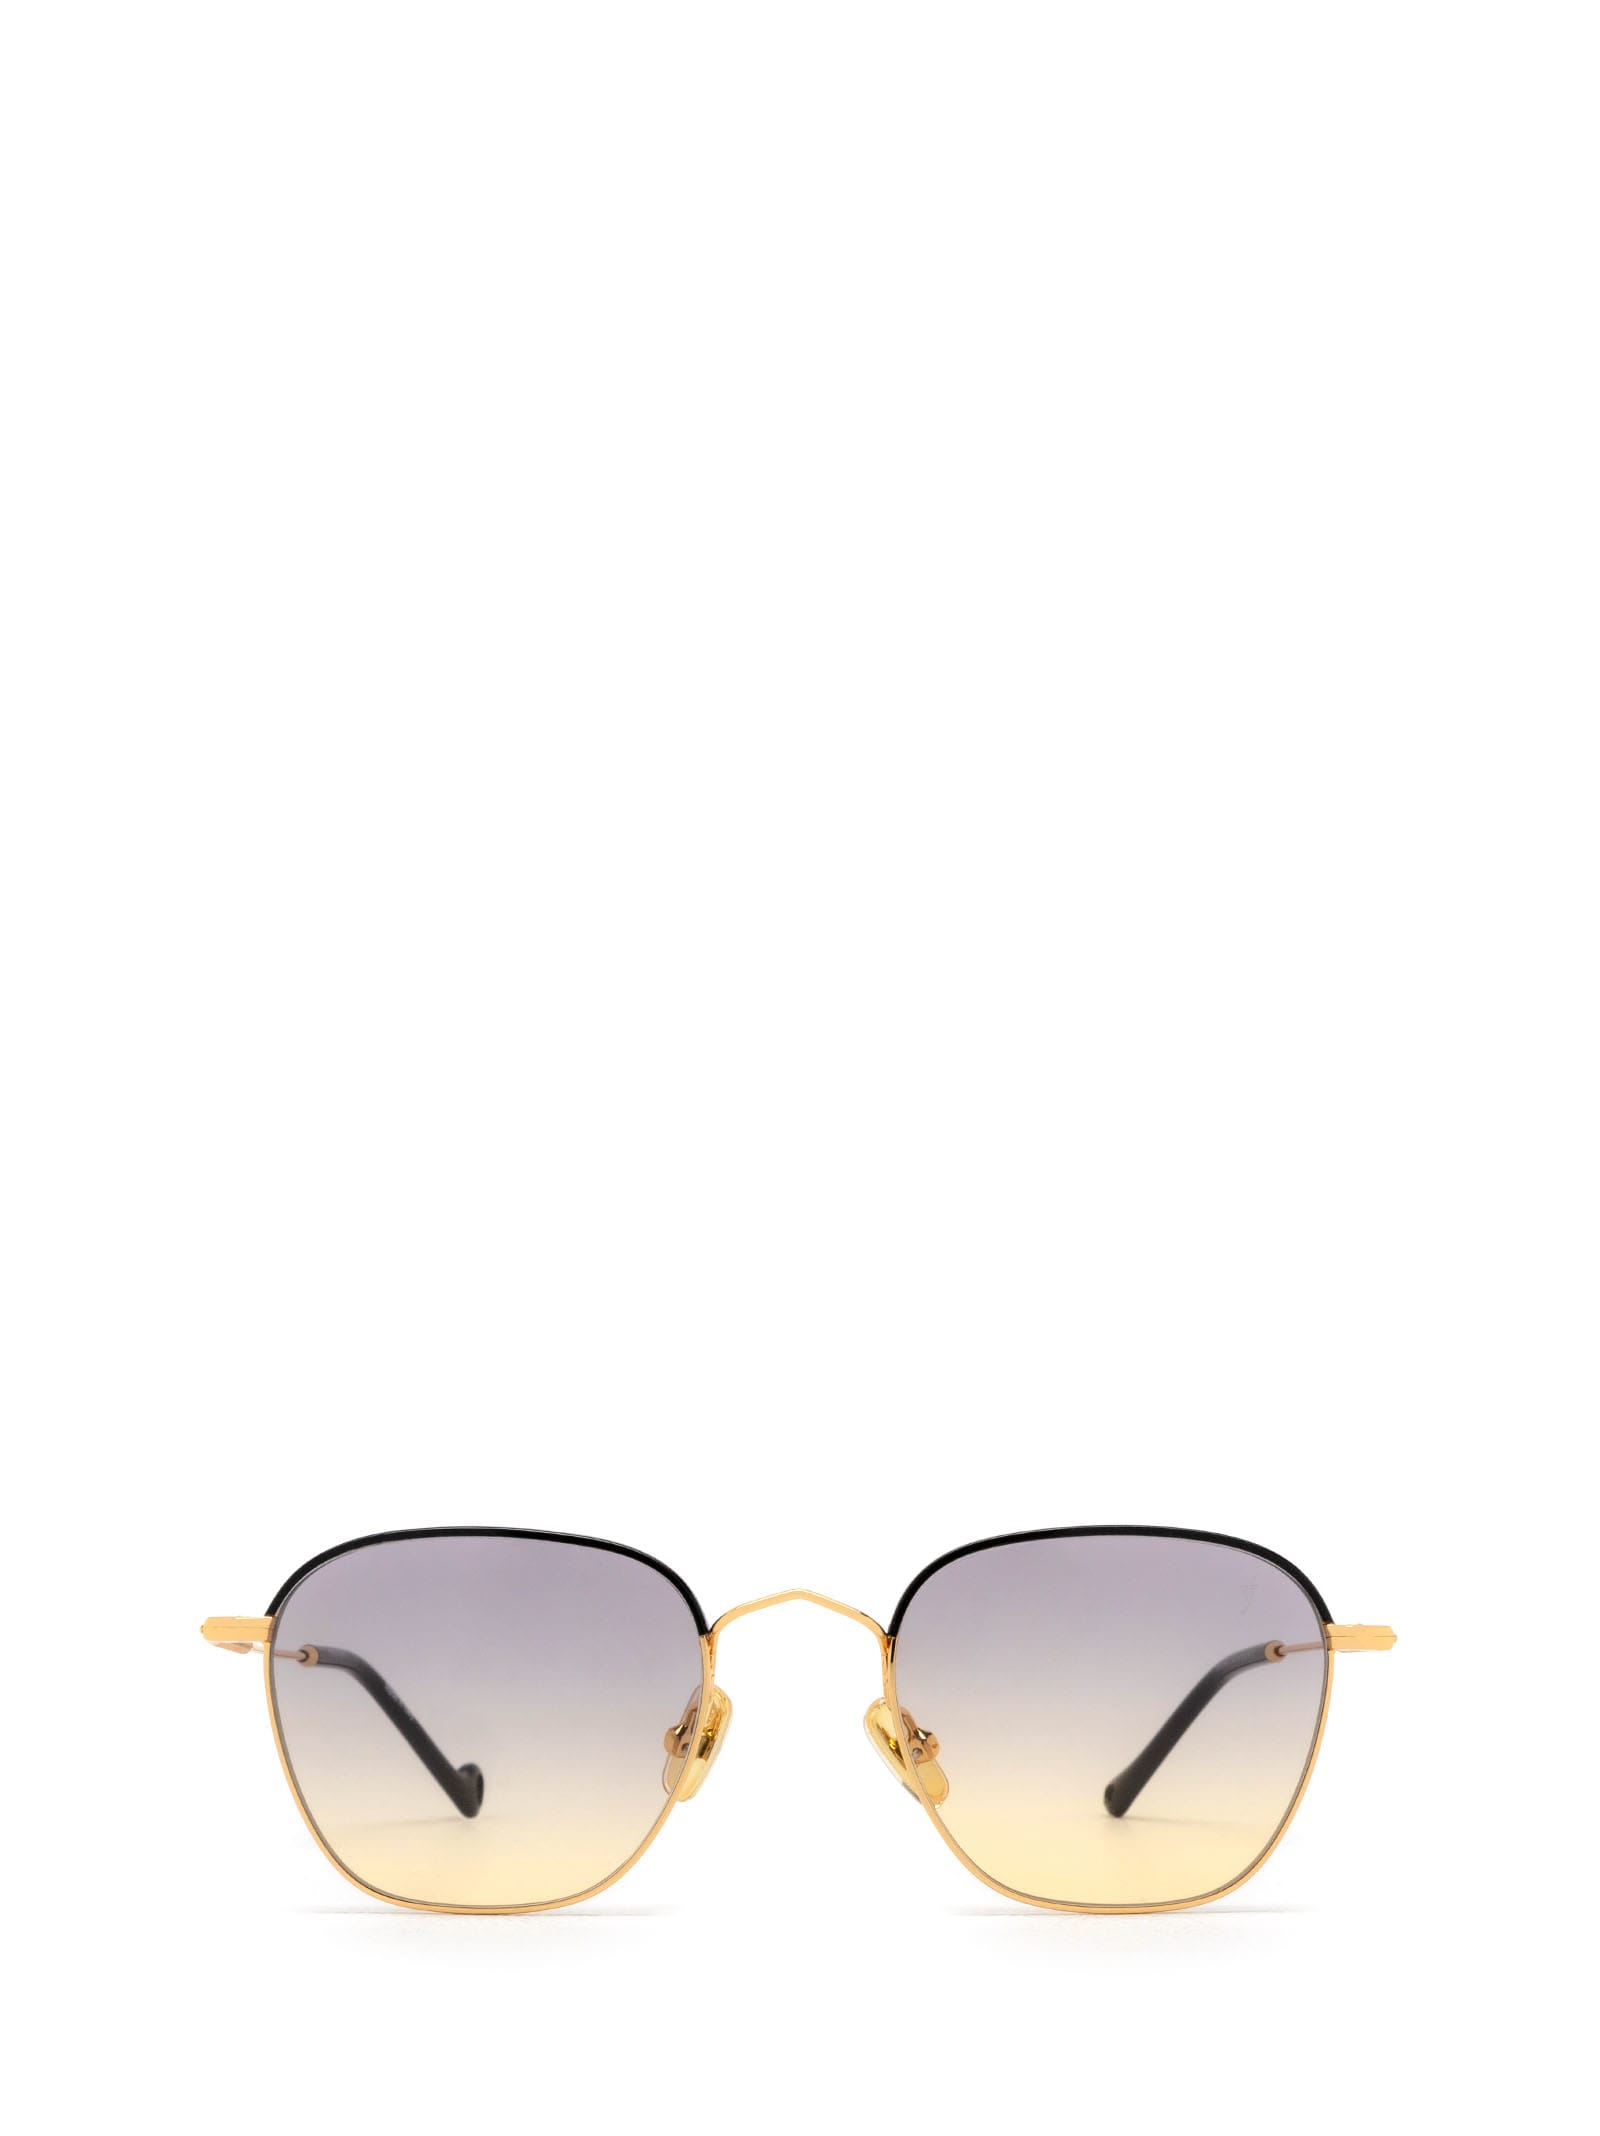 Shop Eyepetizer Atacama Black Sunglasses